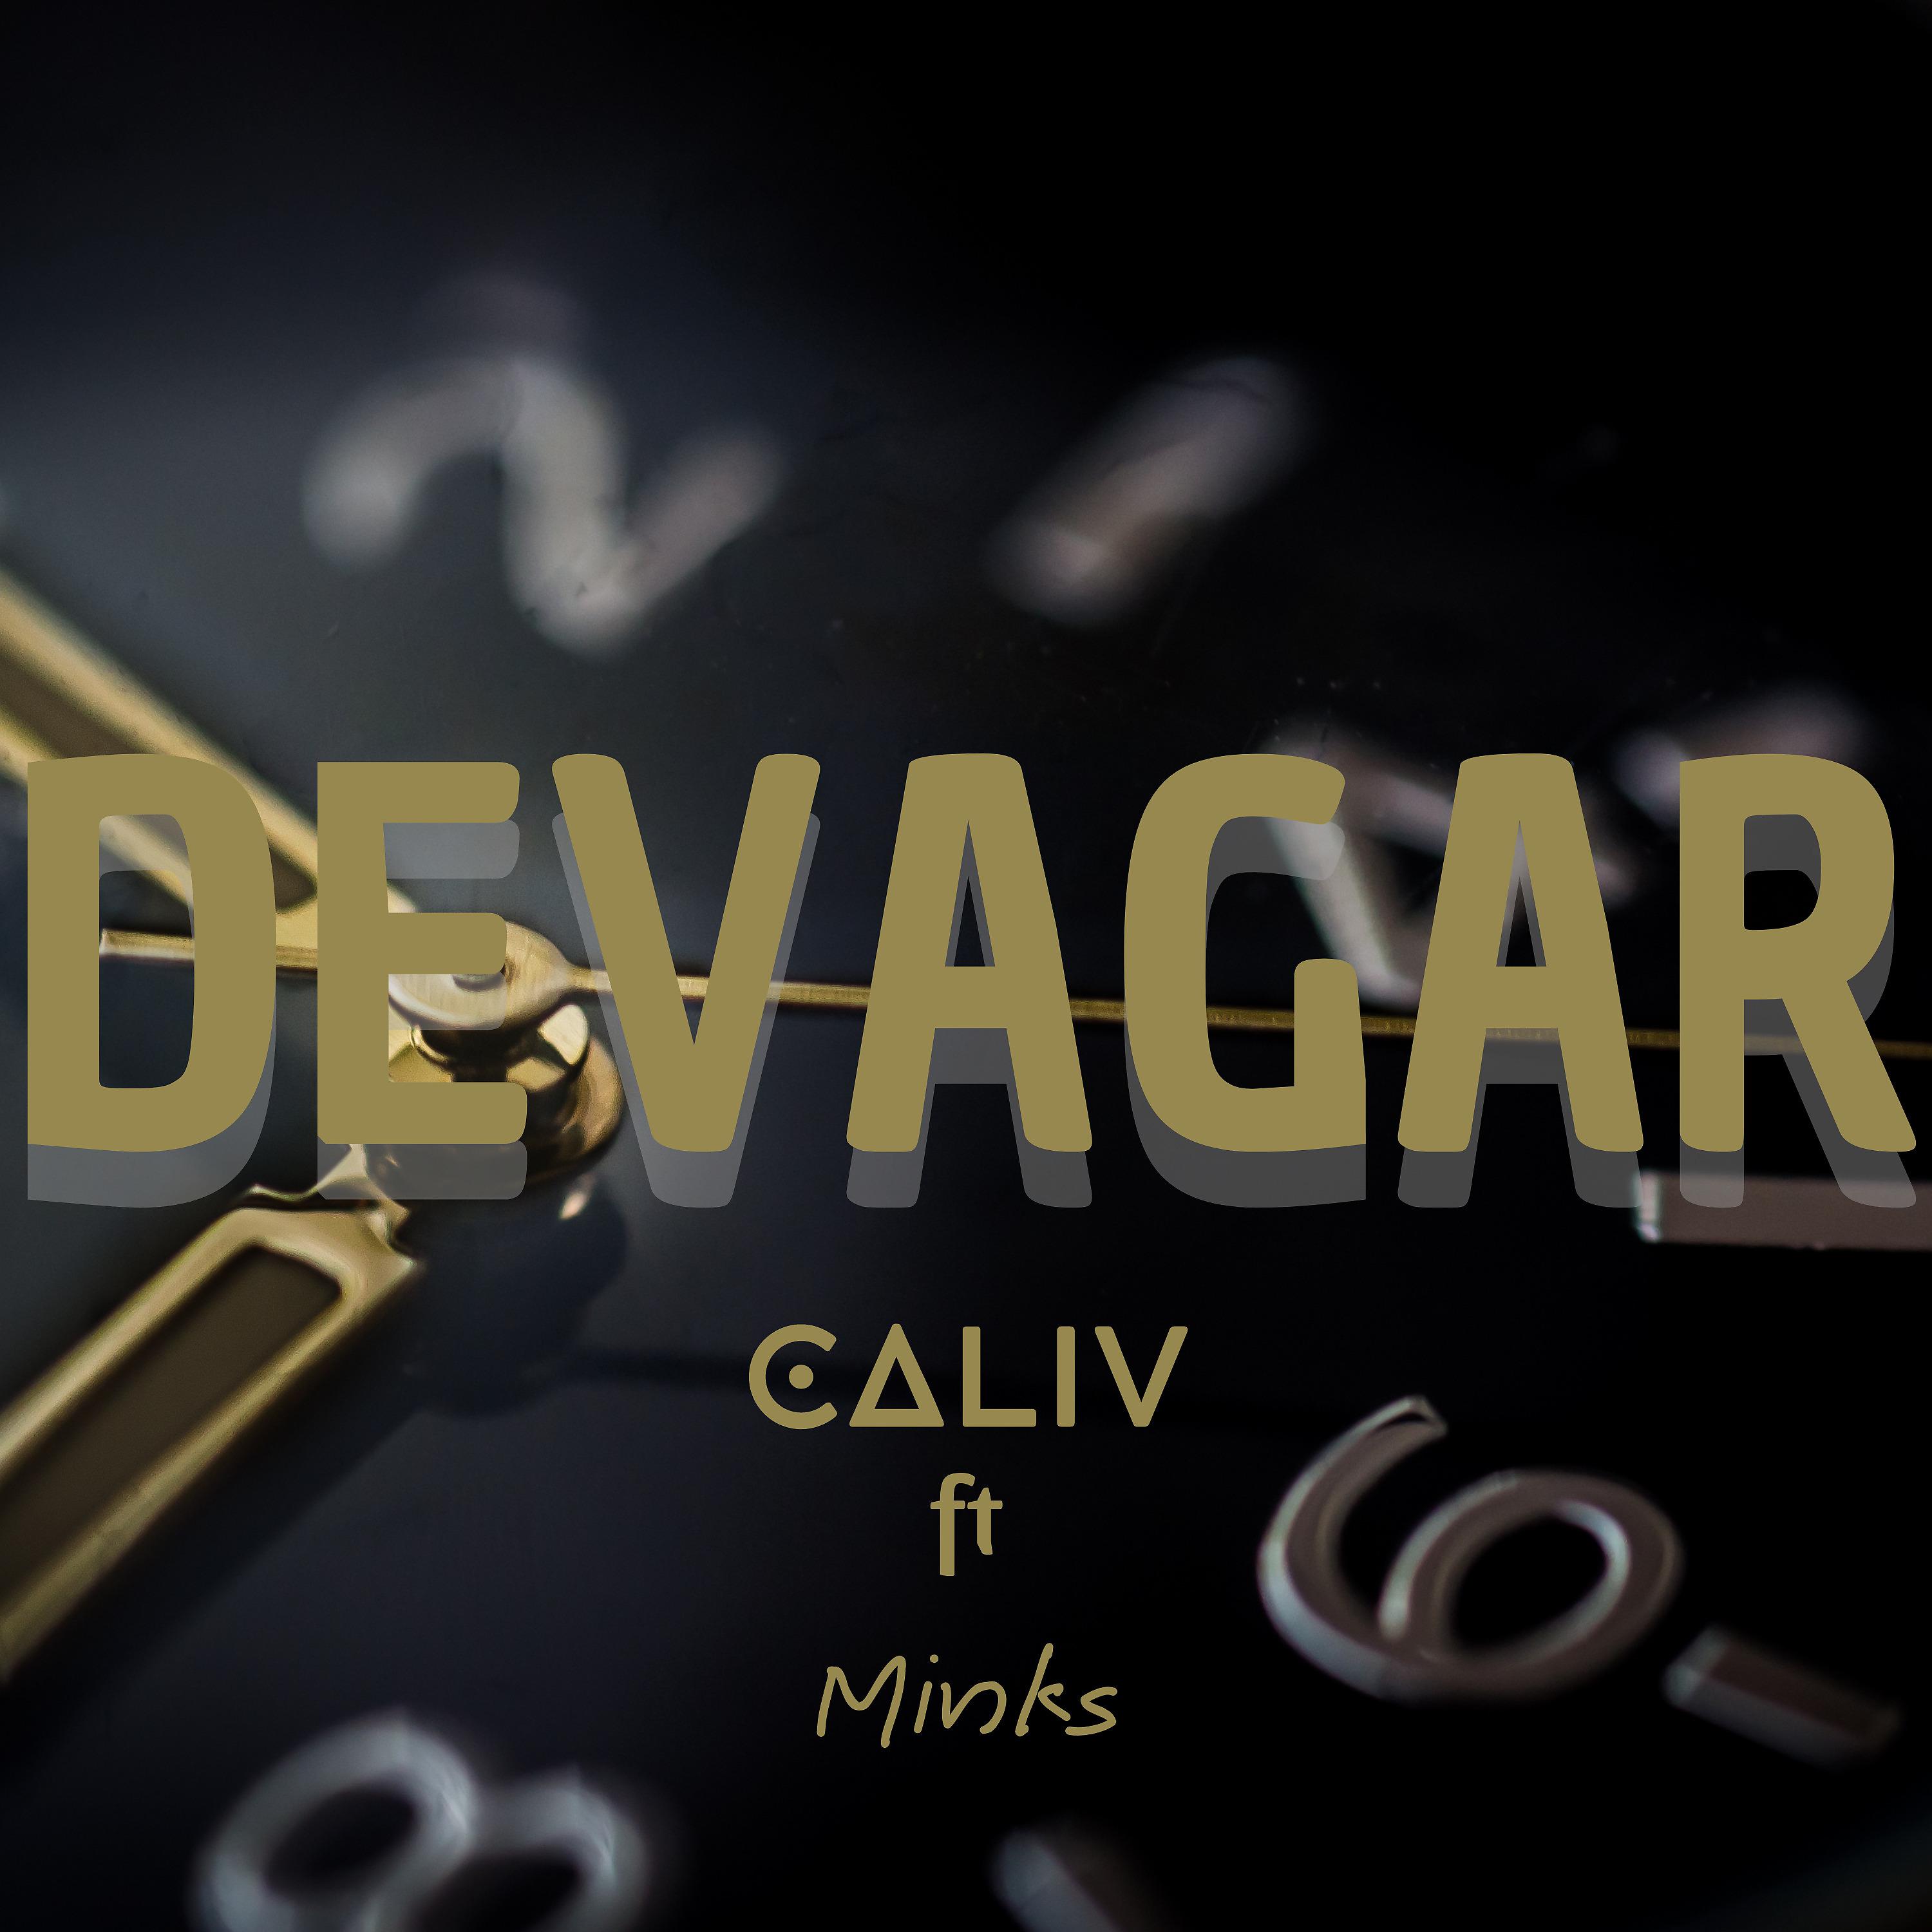 Постер альбома Devagar